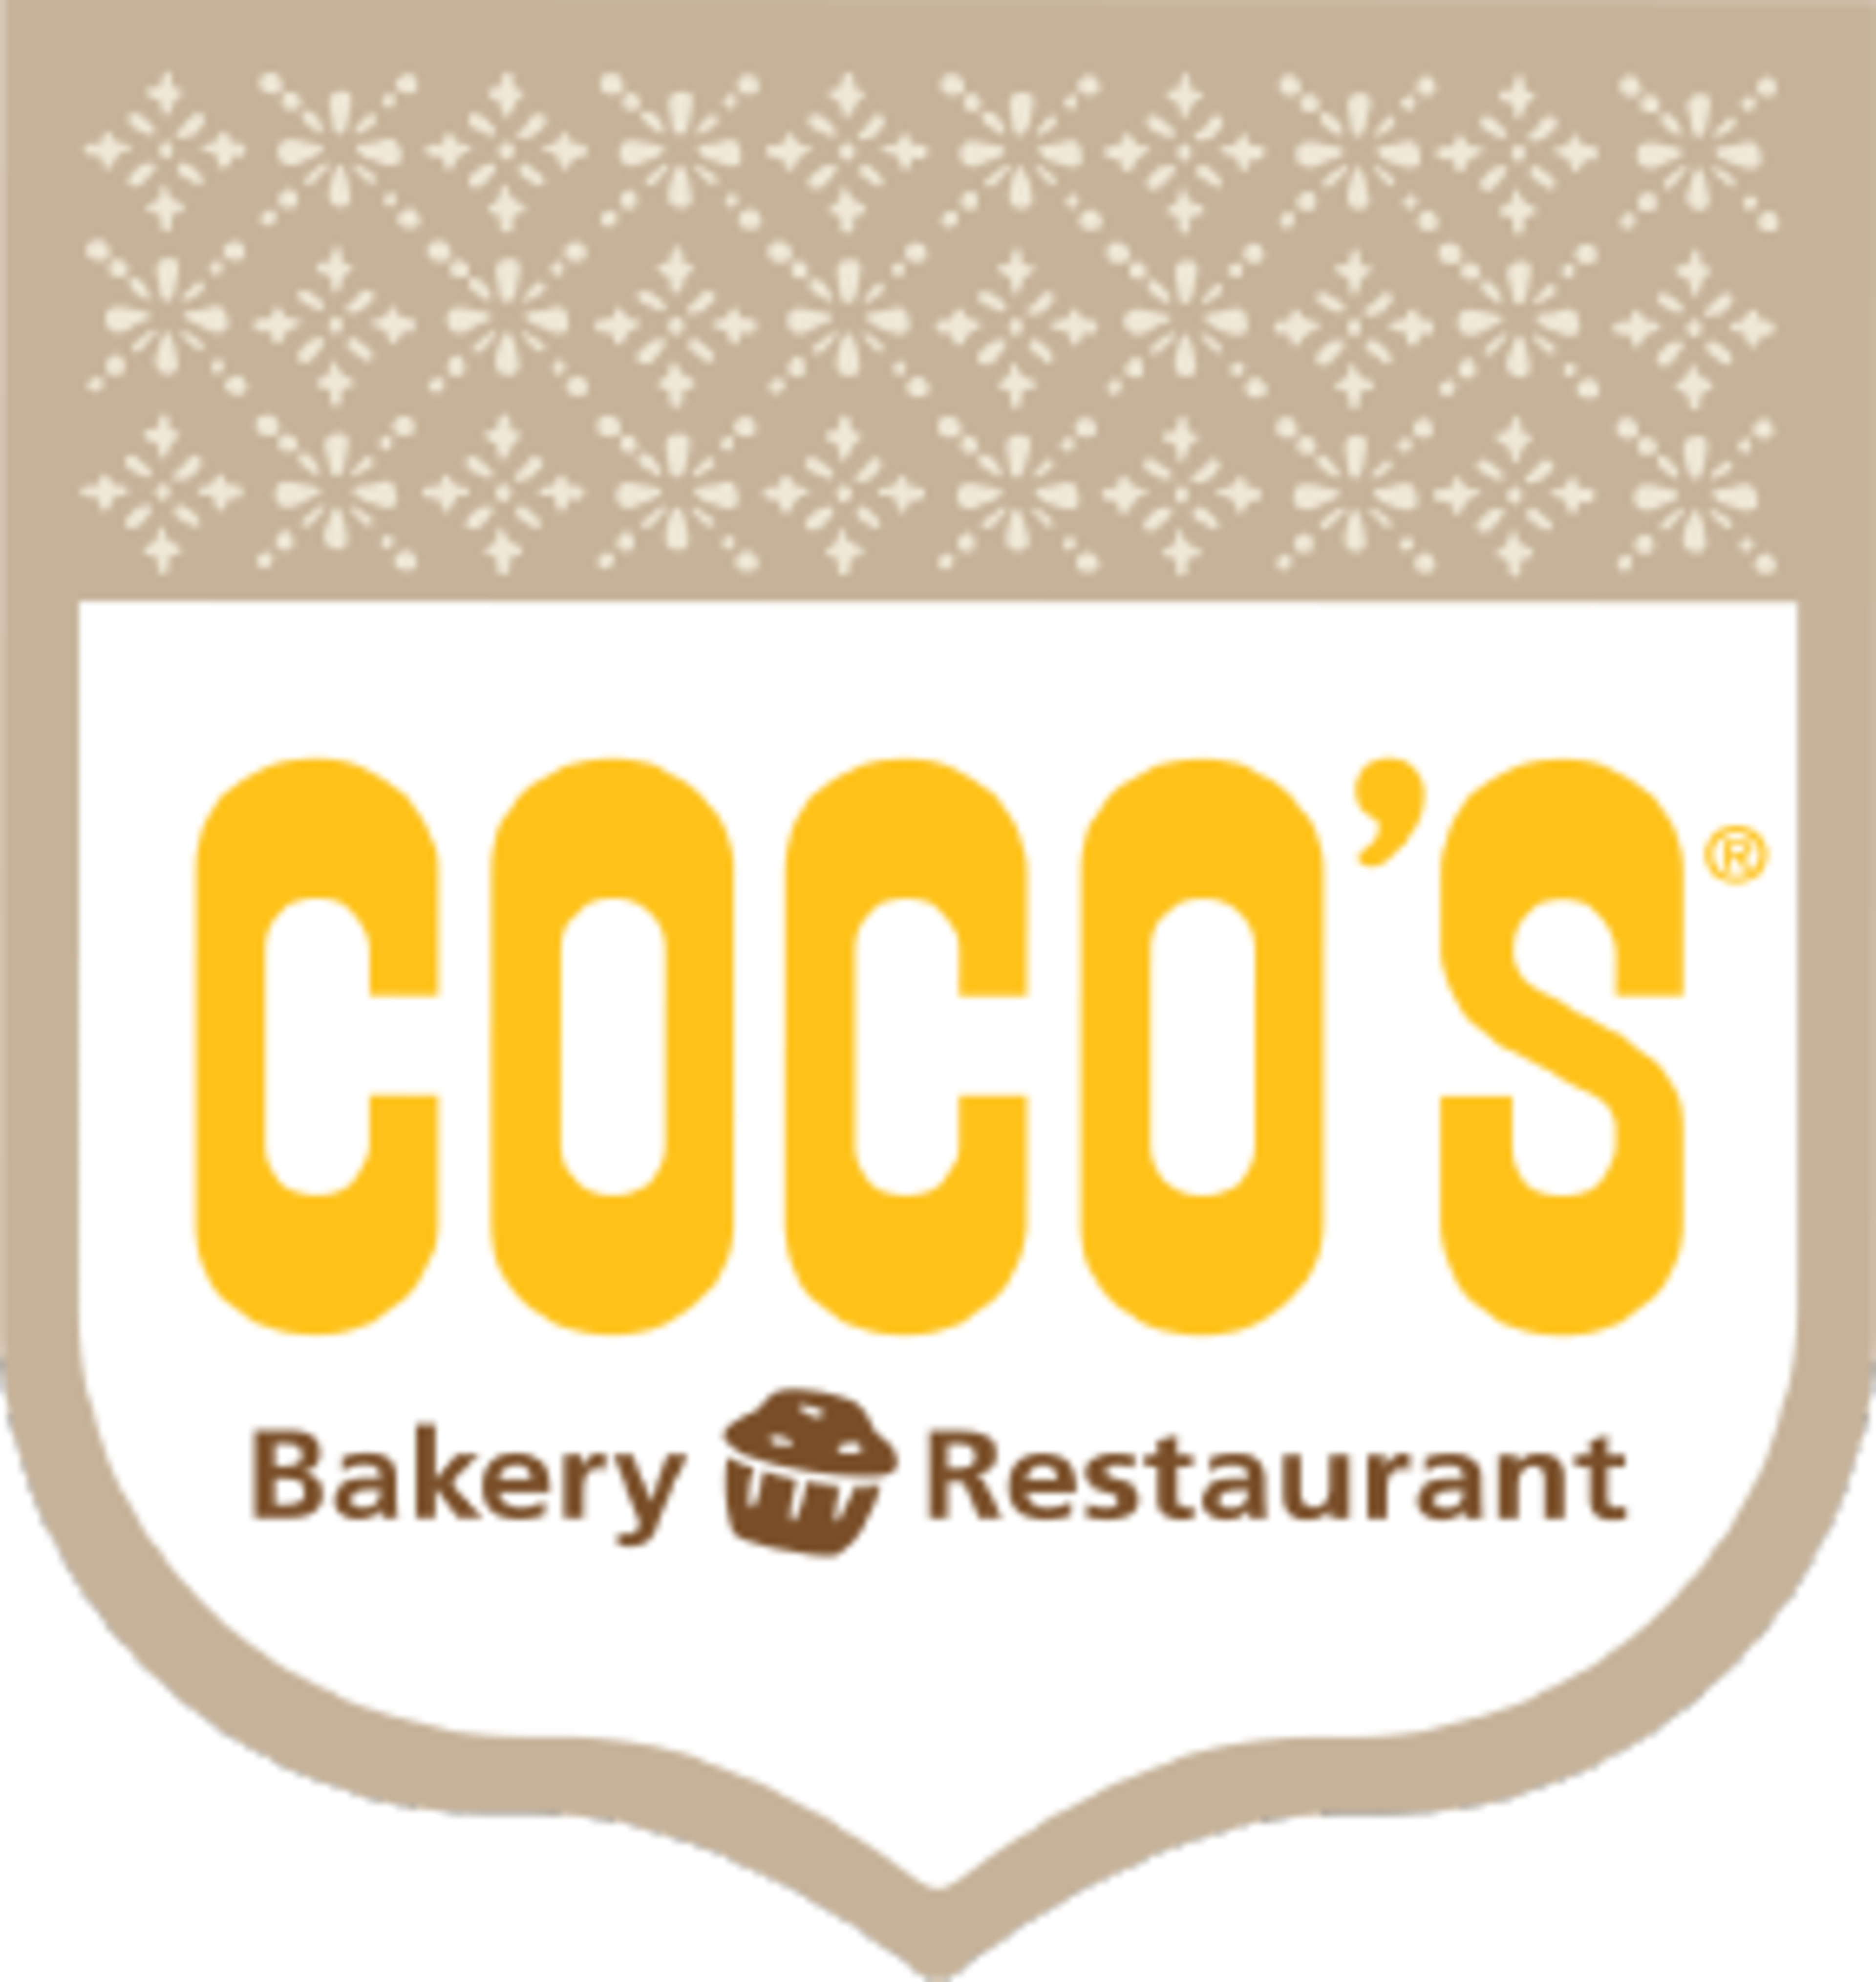 Coco's Bakery RestaurantCode